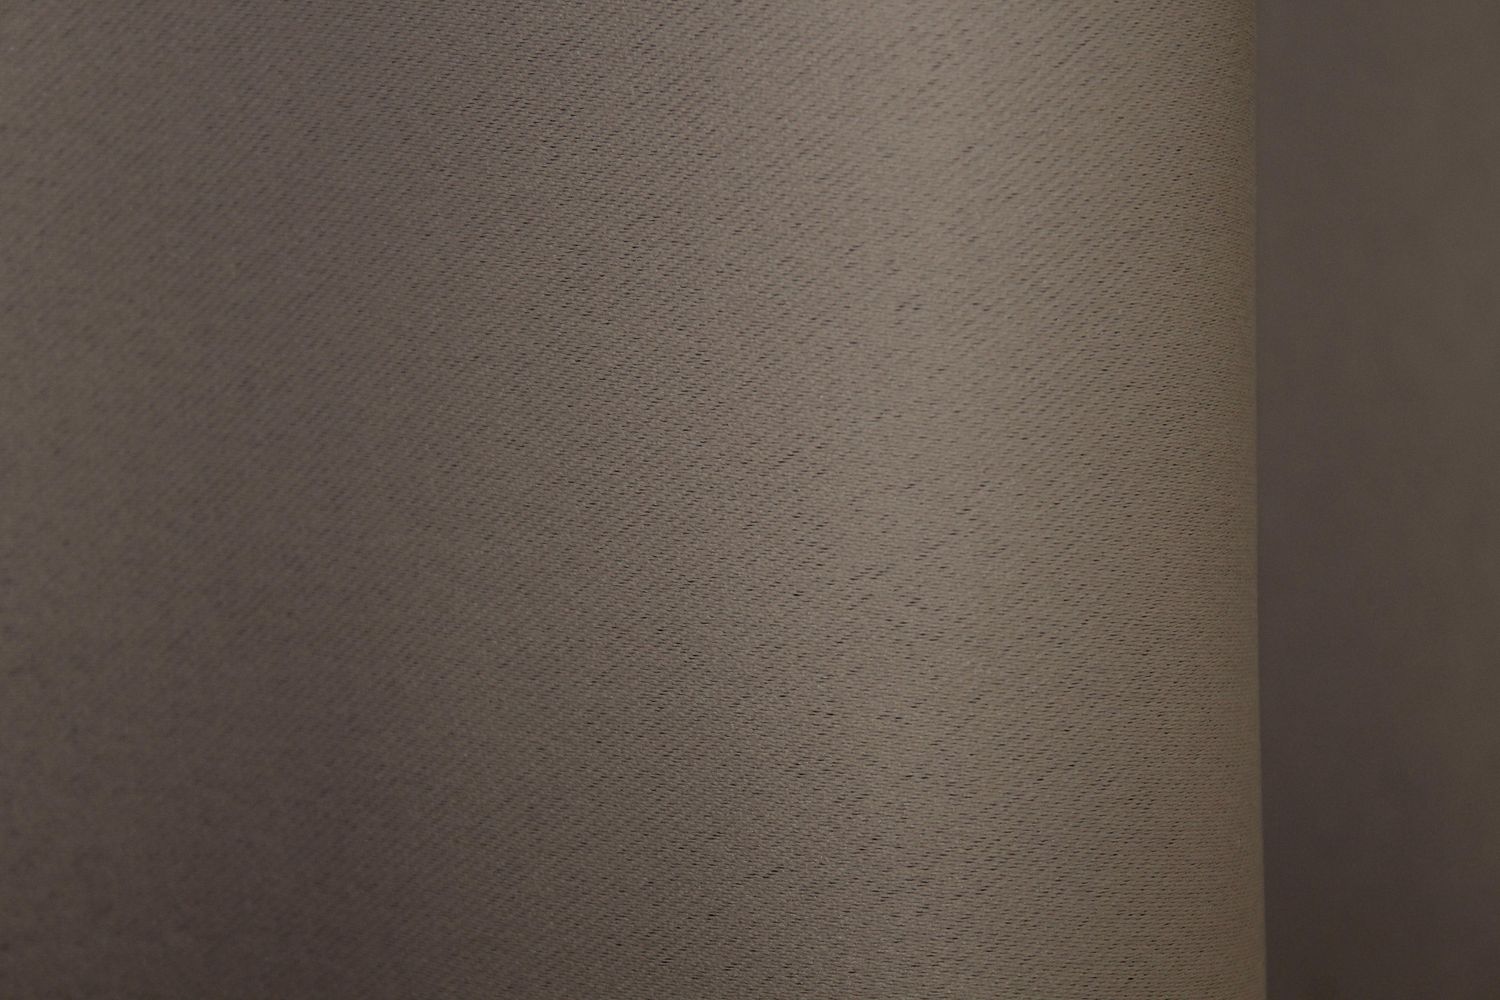 Комплект штор из ткани блэкаут, коллекция "Bagema Rvs" цвет какао 1289ш , Какао, Комплект штор (2шт. 1,0х2,7м.), Классические, Длинные, 1 м., 2,7 м., 100, 270, 1,5 - 2 м., В комплекте 2 шт., Тесьма